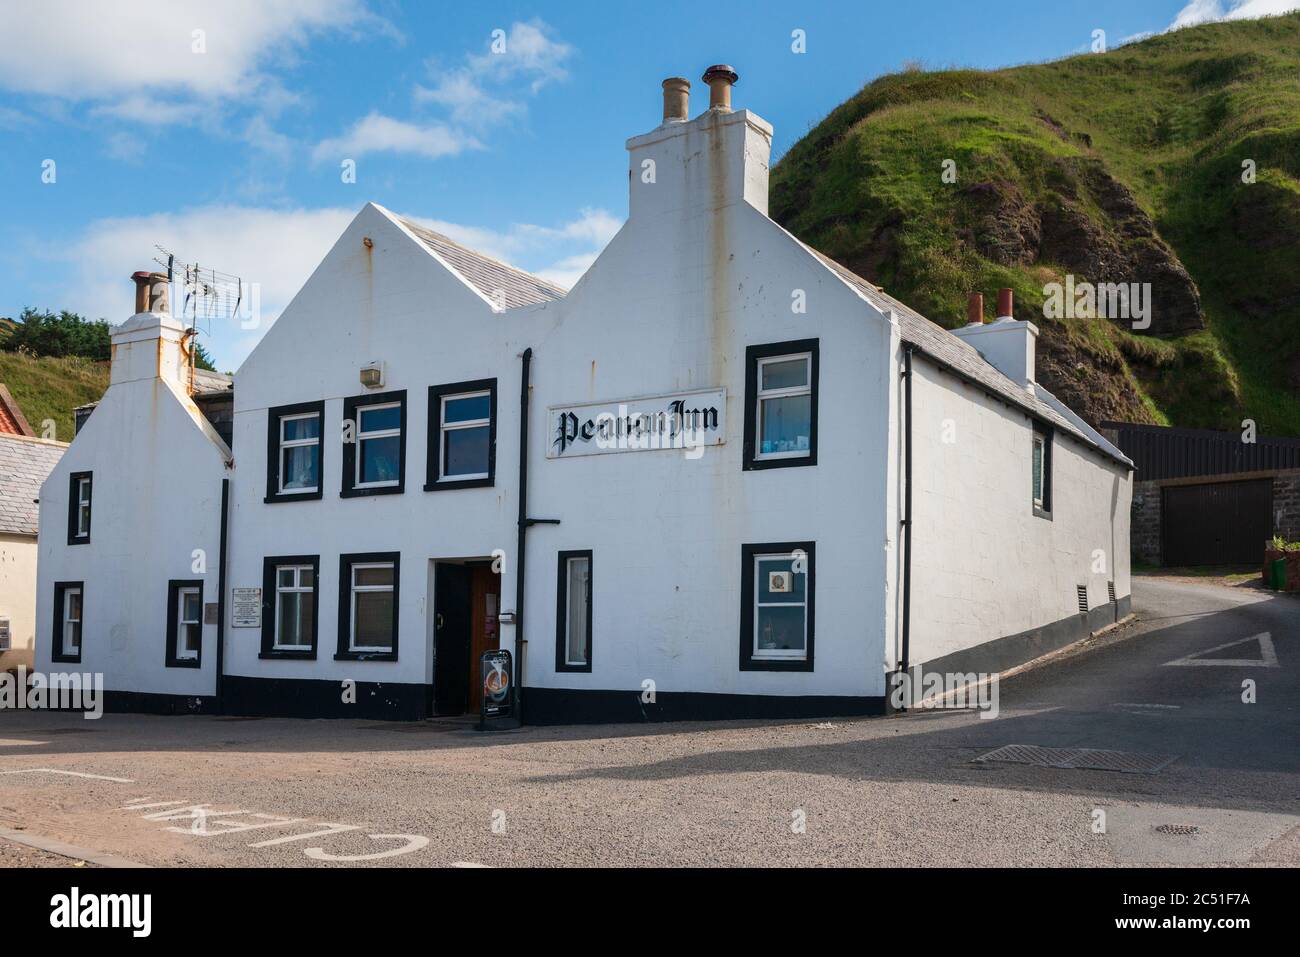 Pub escocés The Penhan Inn en Aberdeenshire, Escocia del noreste. Foto de stock